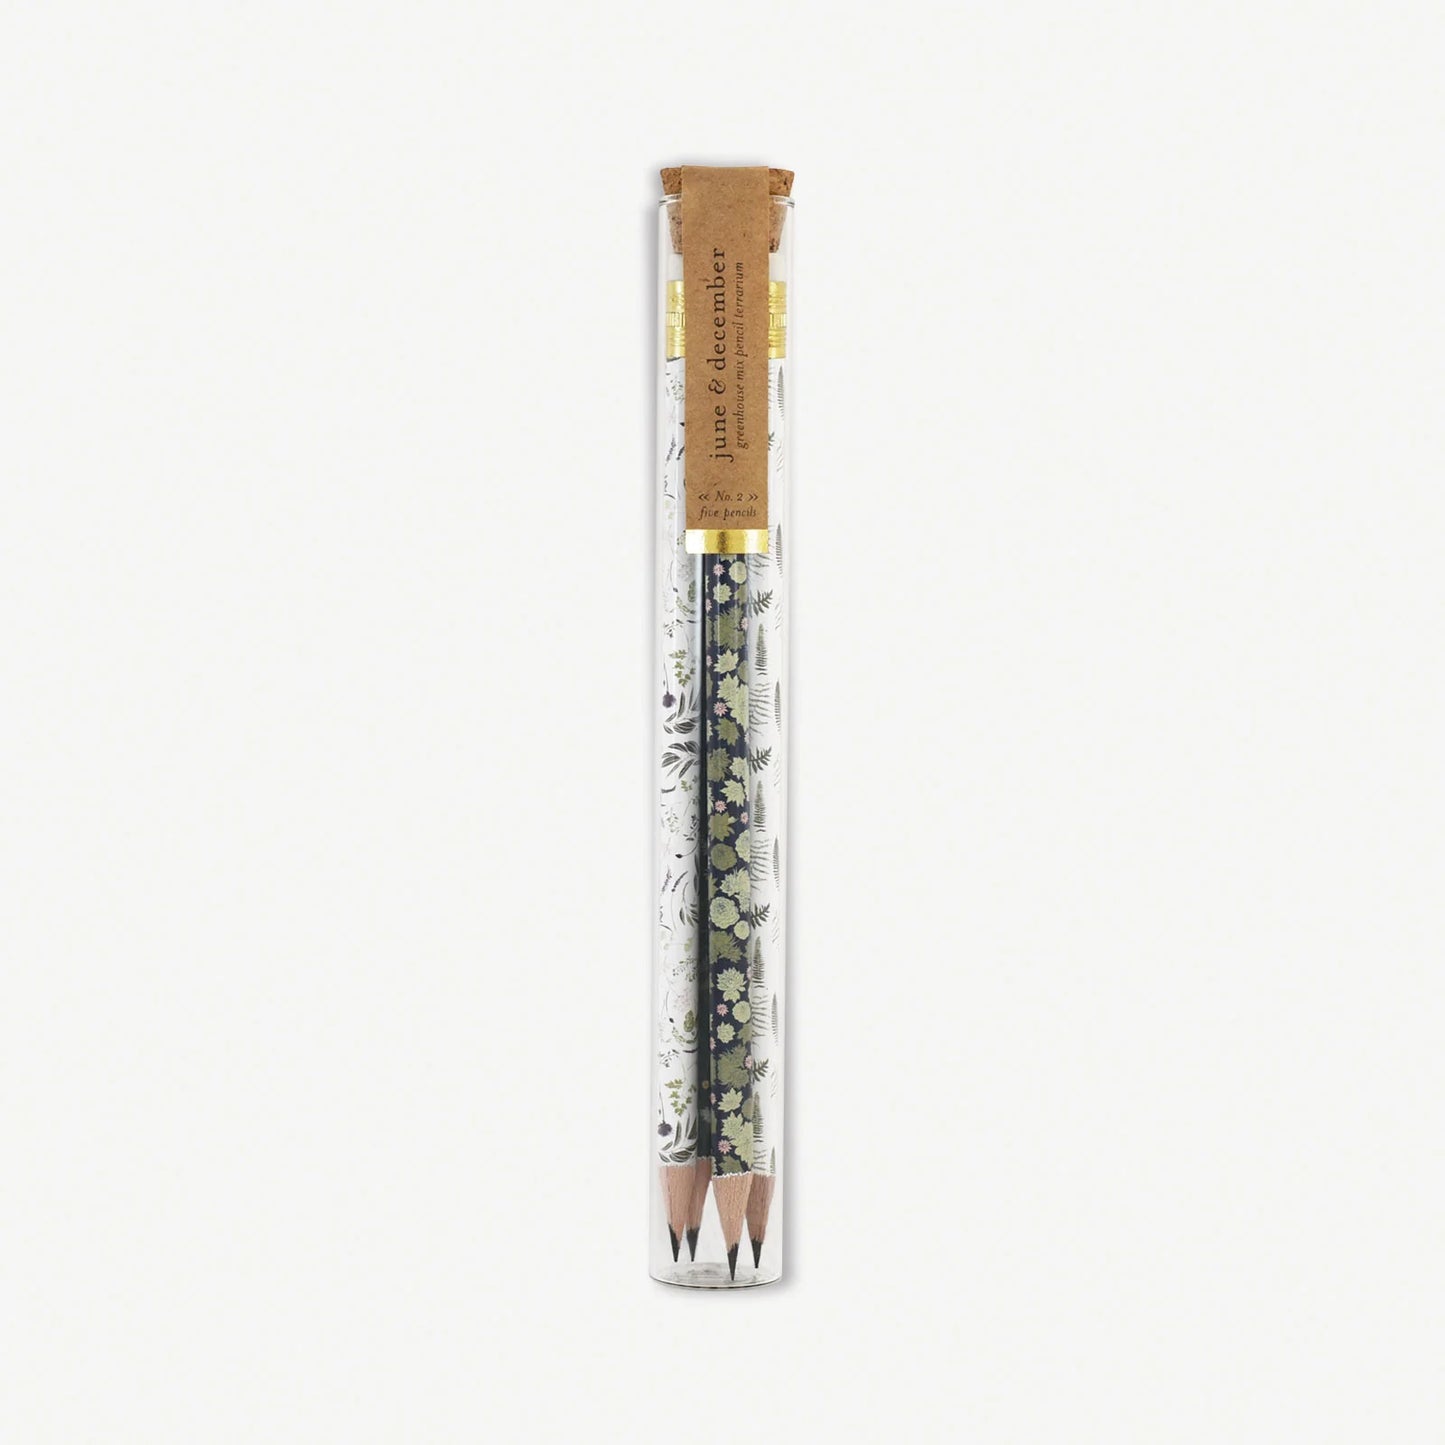 Pencil Terrarium - Greenhouse Mix